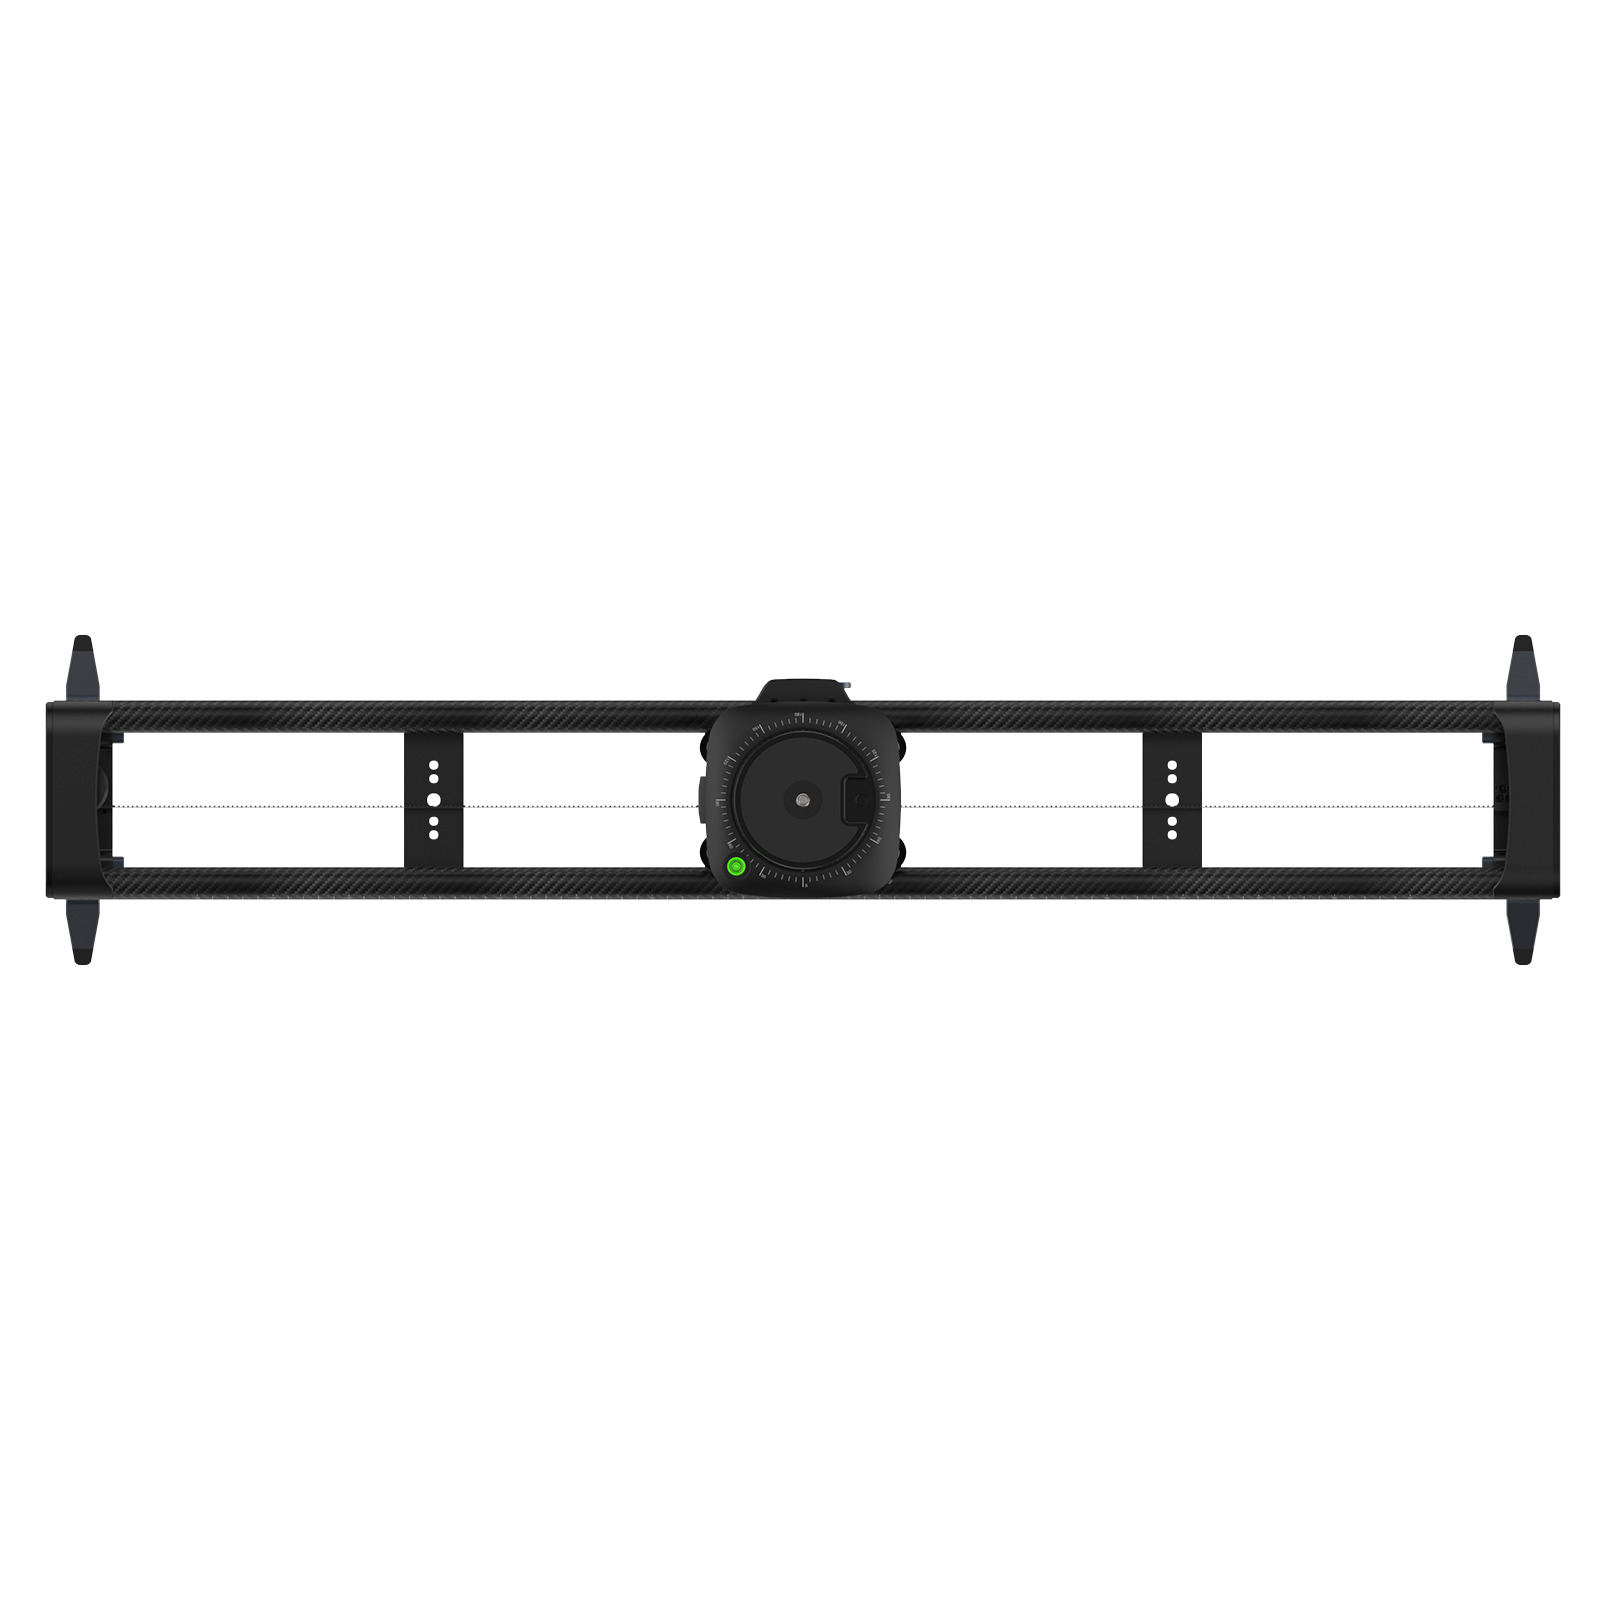 Zeapon AXIS 100 電動雲台付き多軸電動スライダー 最大移動距離100cm LCDスクリーン付きパンヘッド 速度調節 目盛り定規 手動式切り替え可能 デュアル標準ネジ 水平方向12kg 垂直方向約3.5kg 2